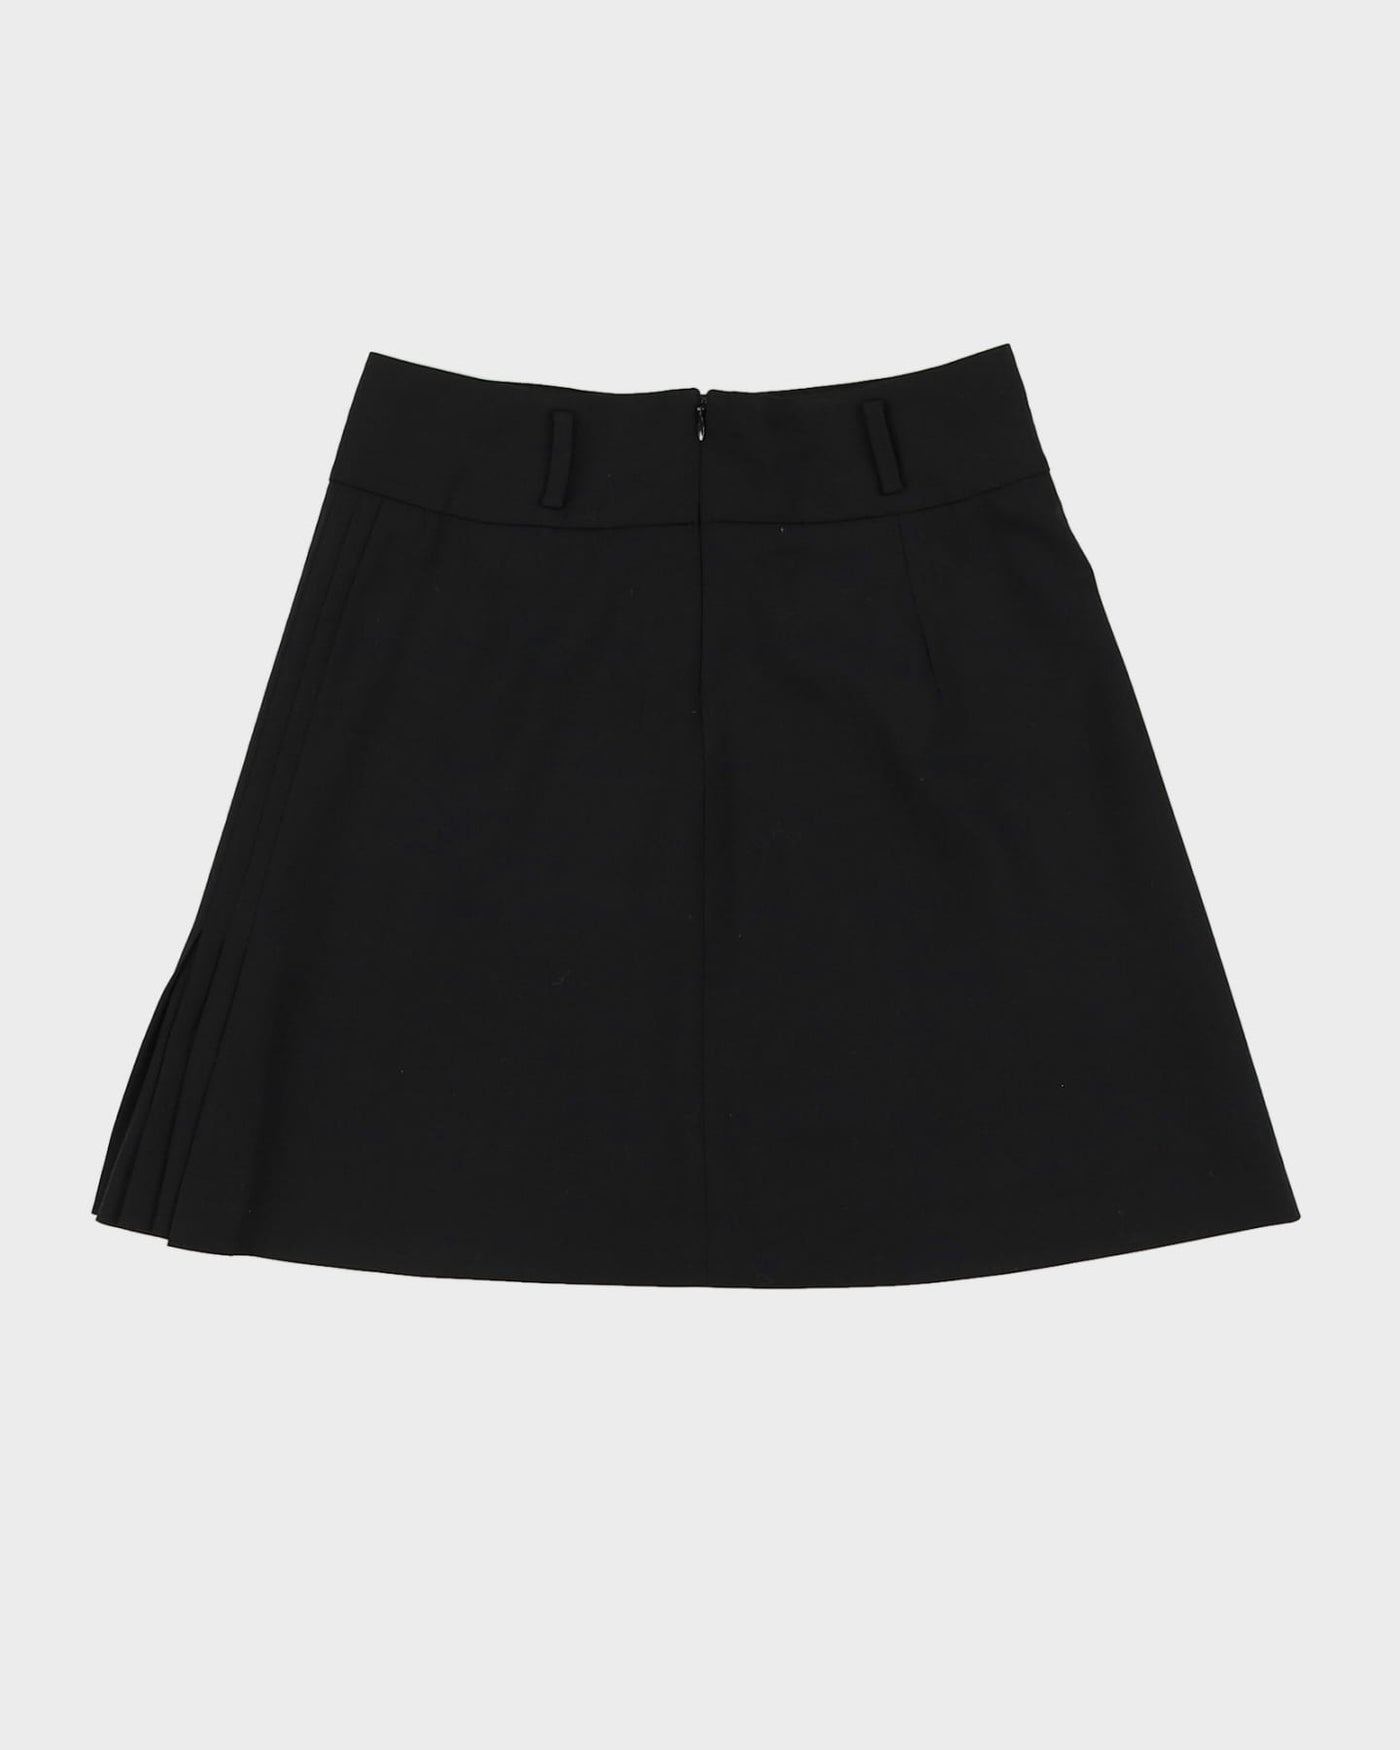 Tommy Hilfiger Black Pleated Skirt - S